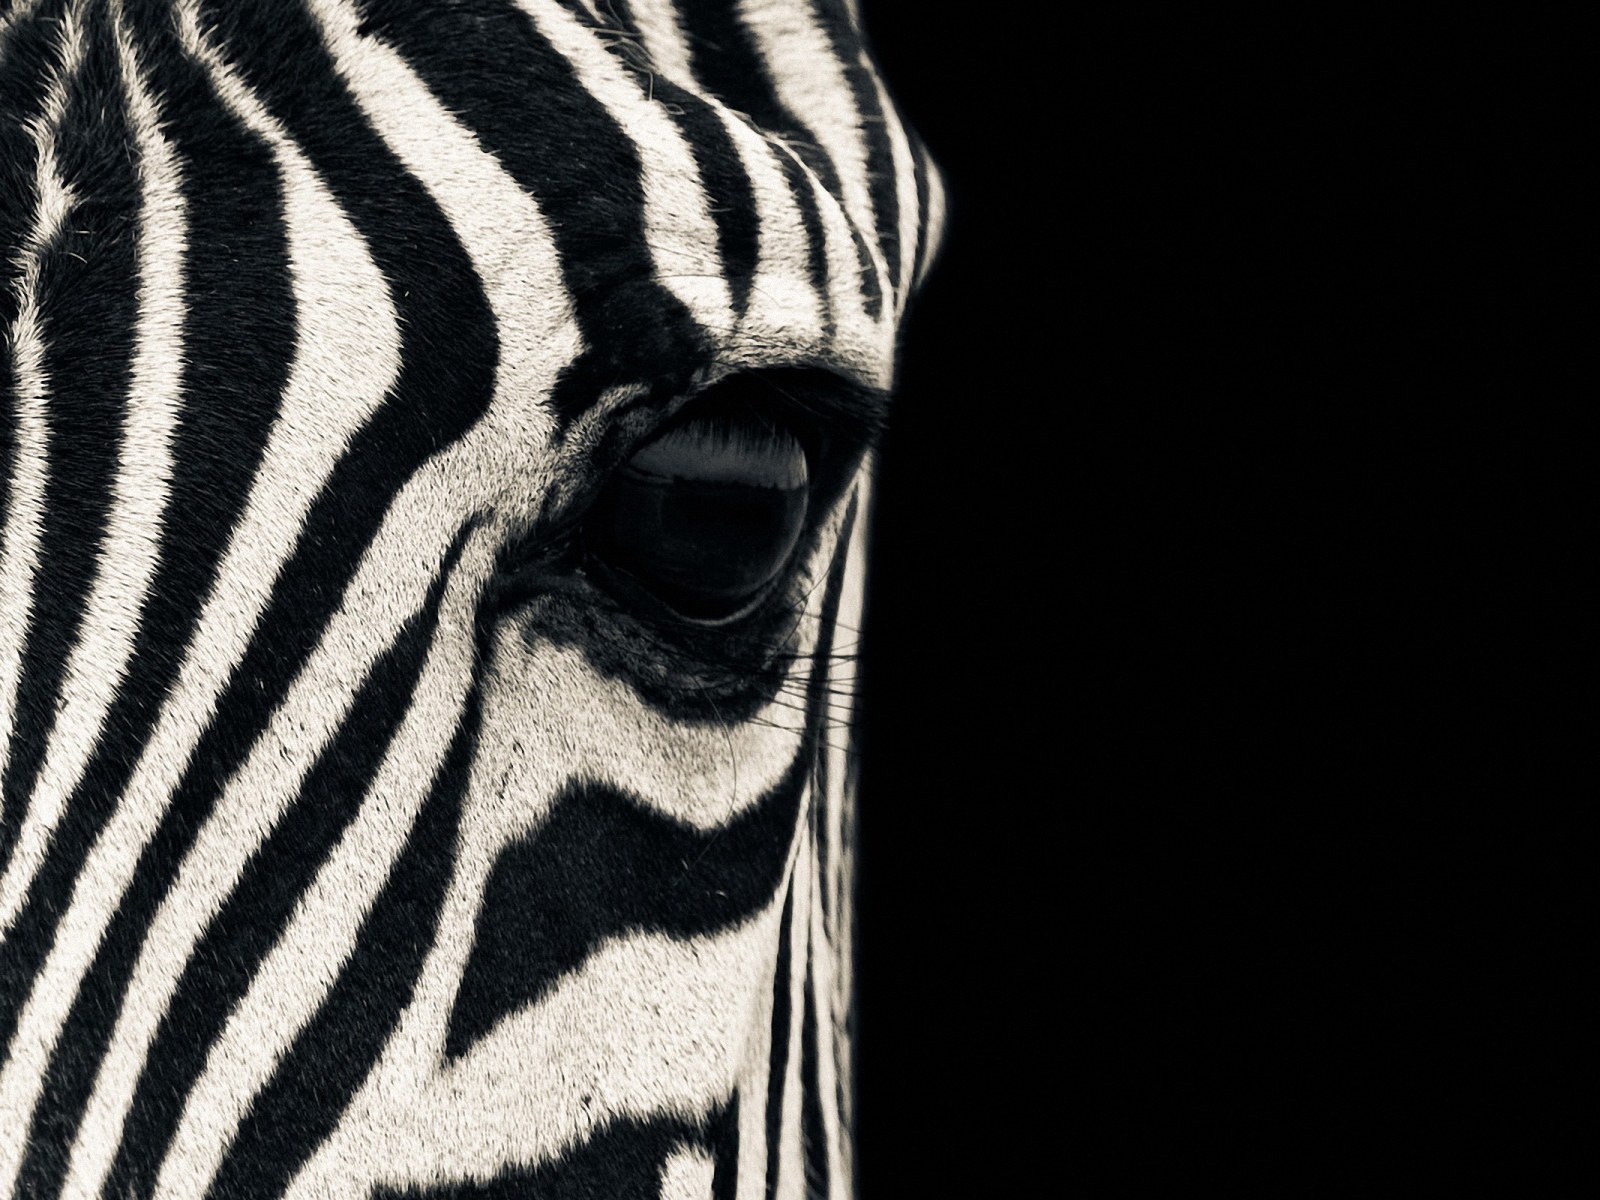 Zebra Wallpaper Stock Photos